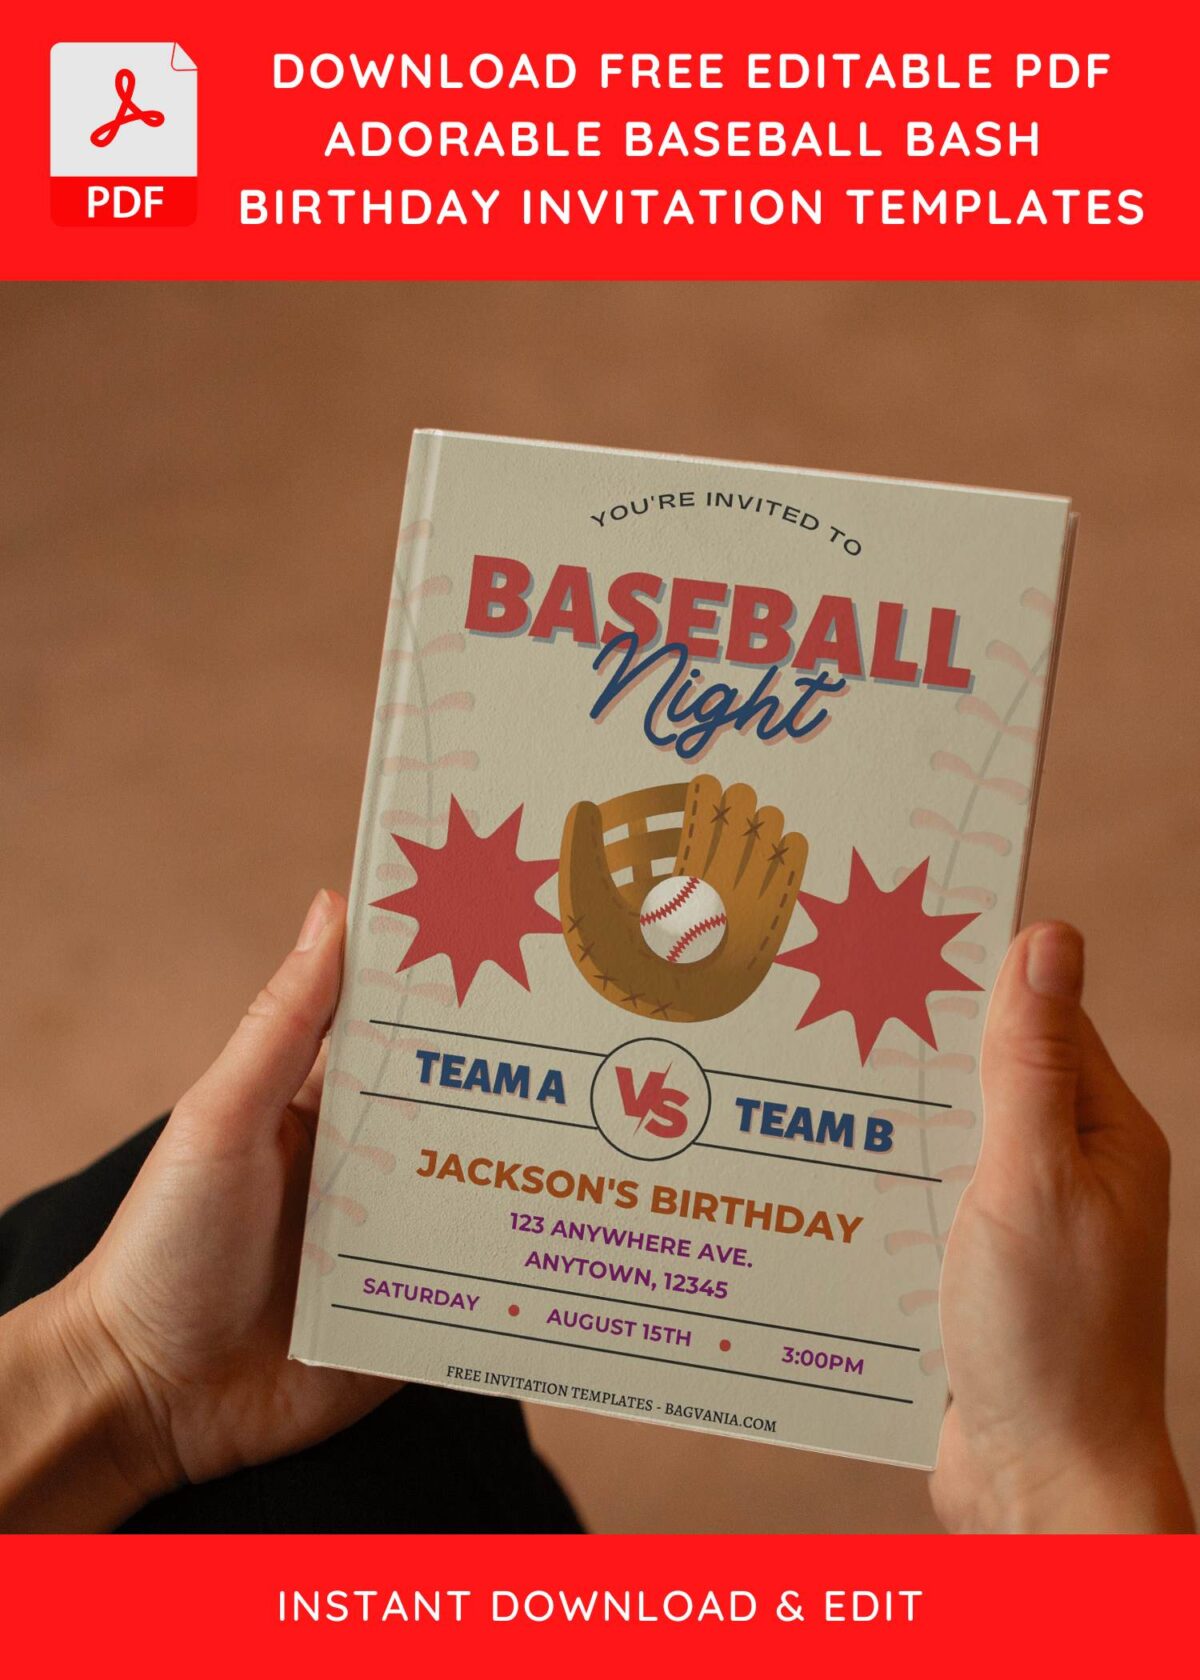 (Free Editable PDF) Awesome Baseball Birthday Invitation Templates E